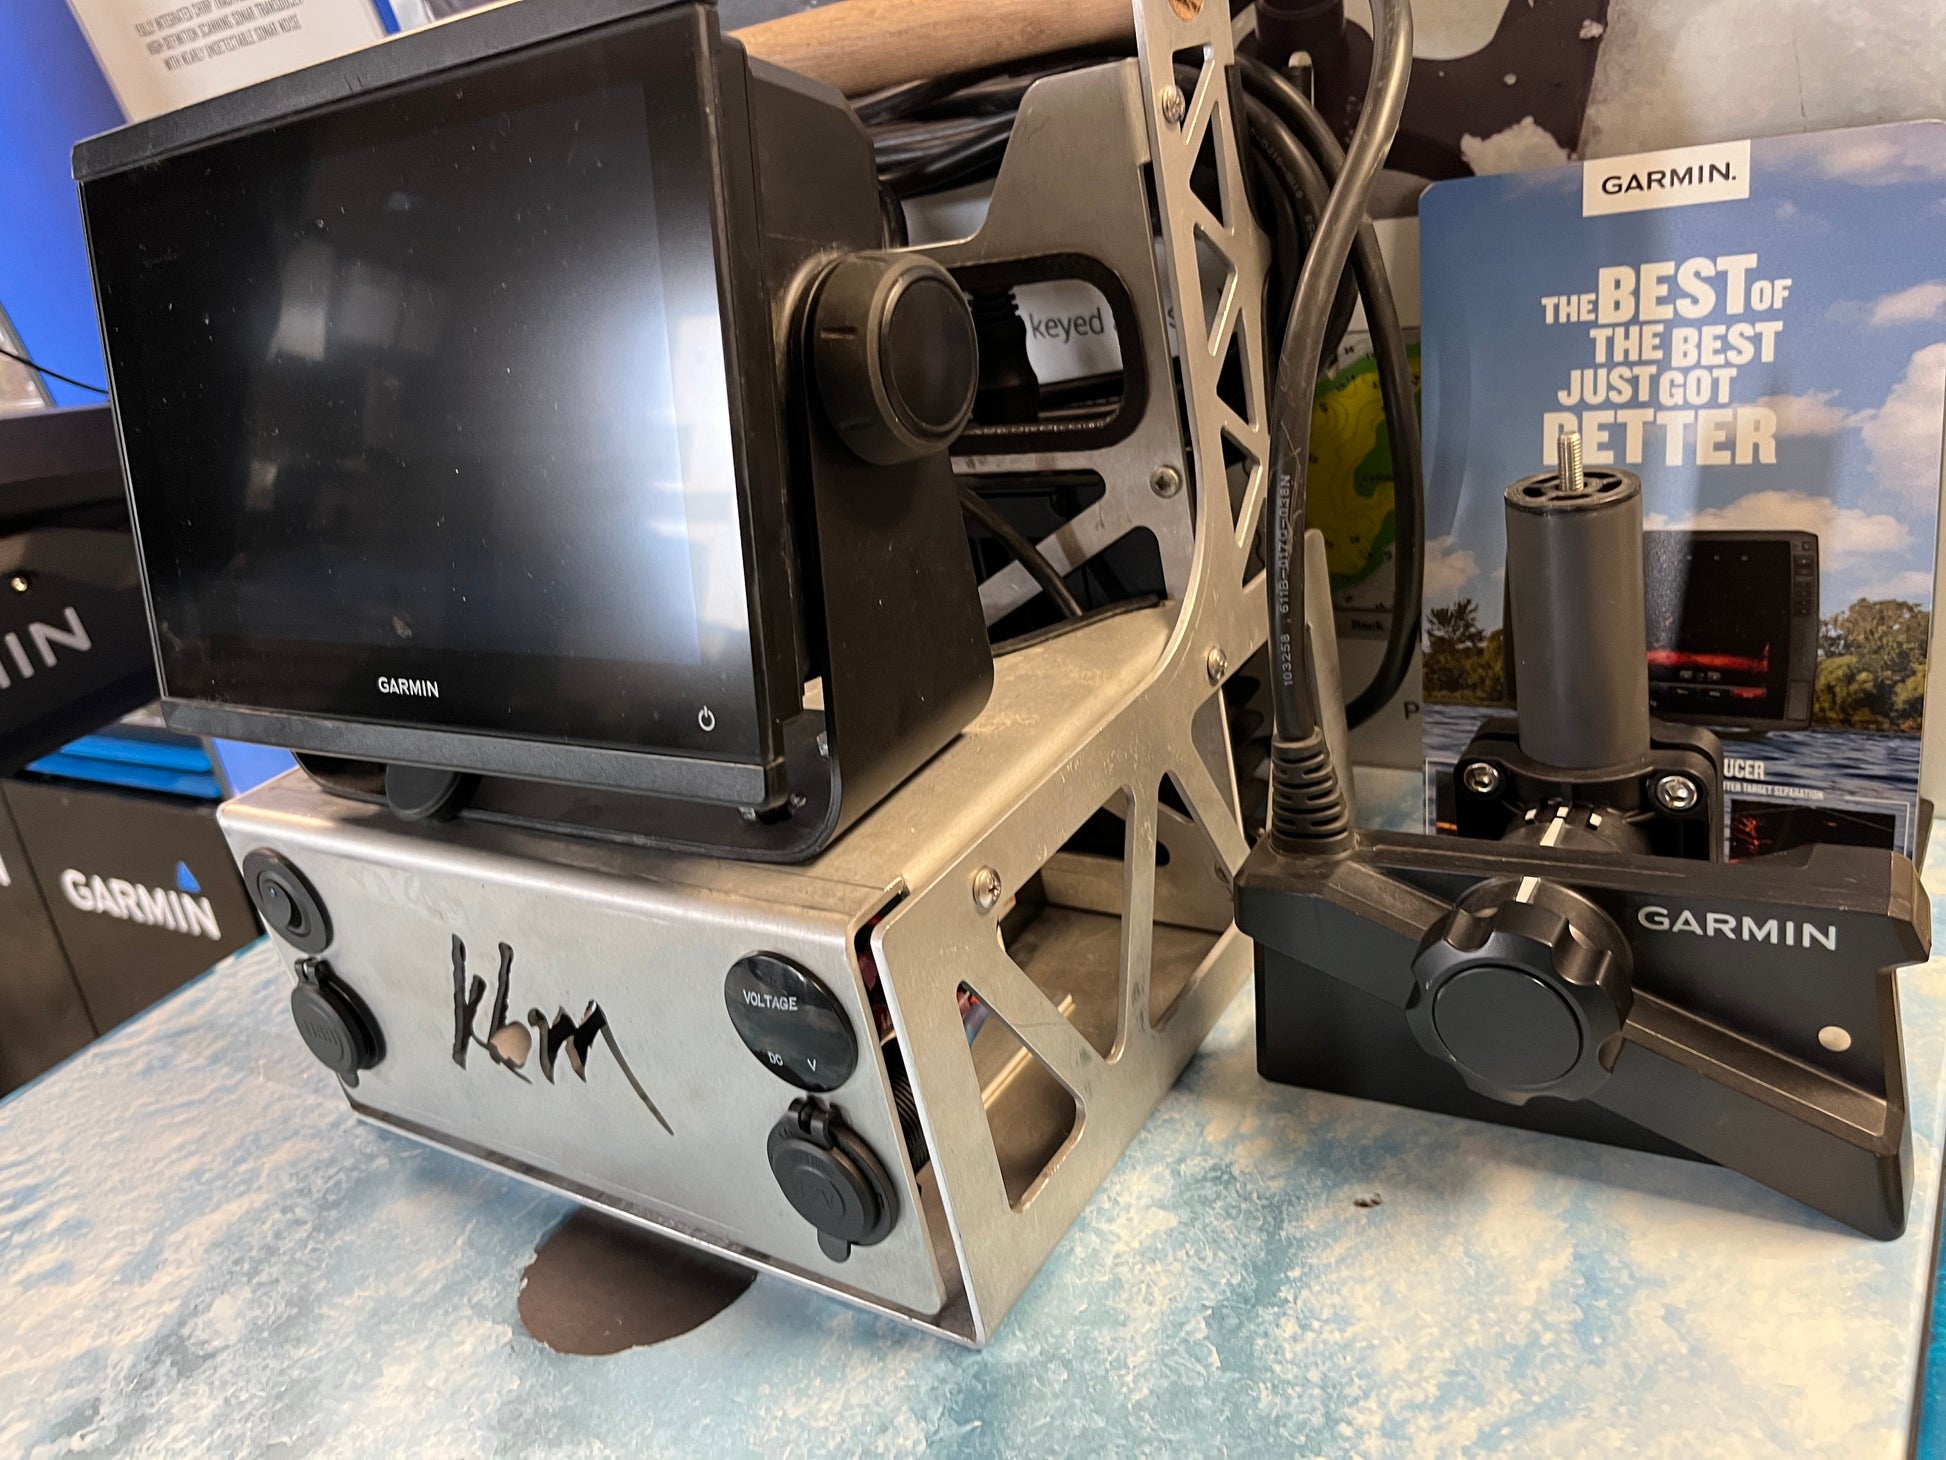 KBM/Garmin Ice Fishing Shuttle with ECHOMAP Chartplotters + Livescope Option